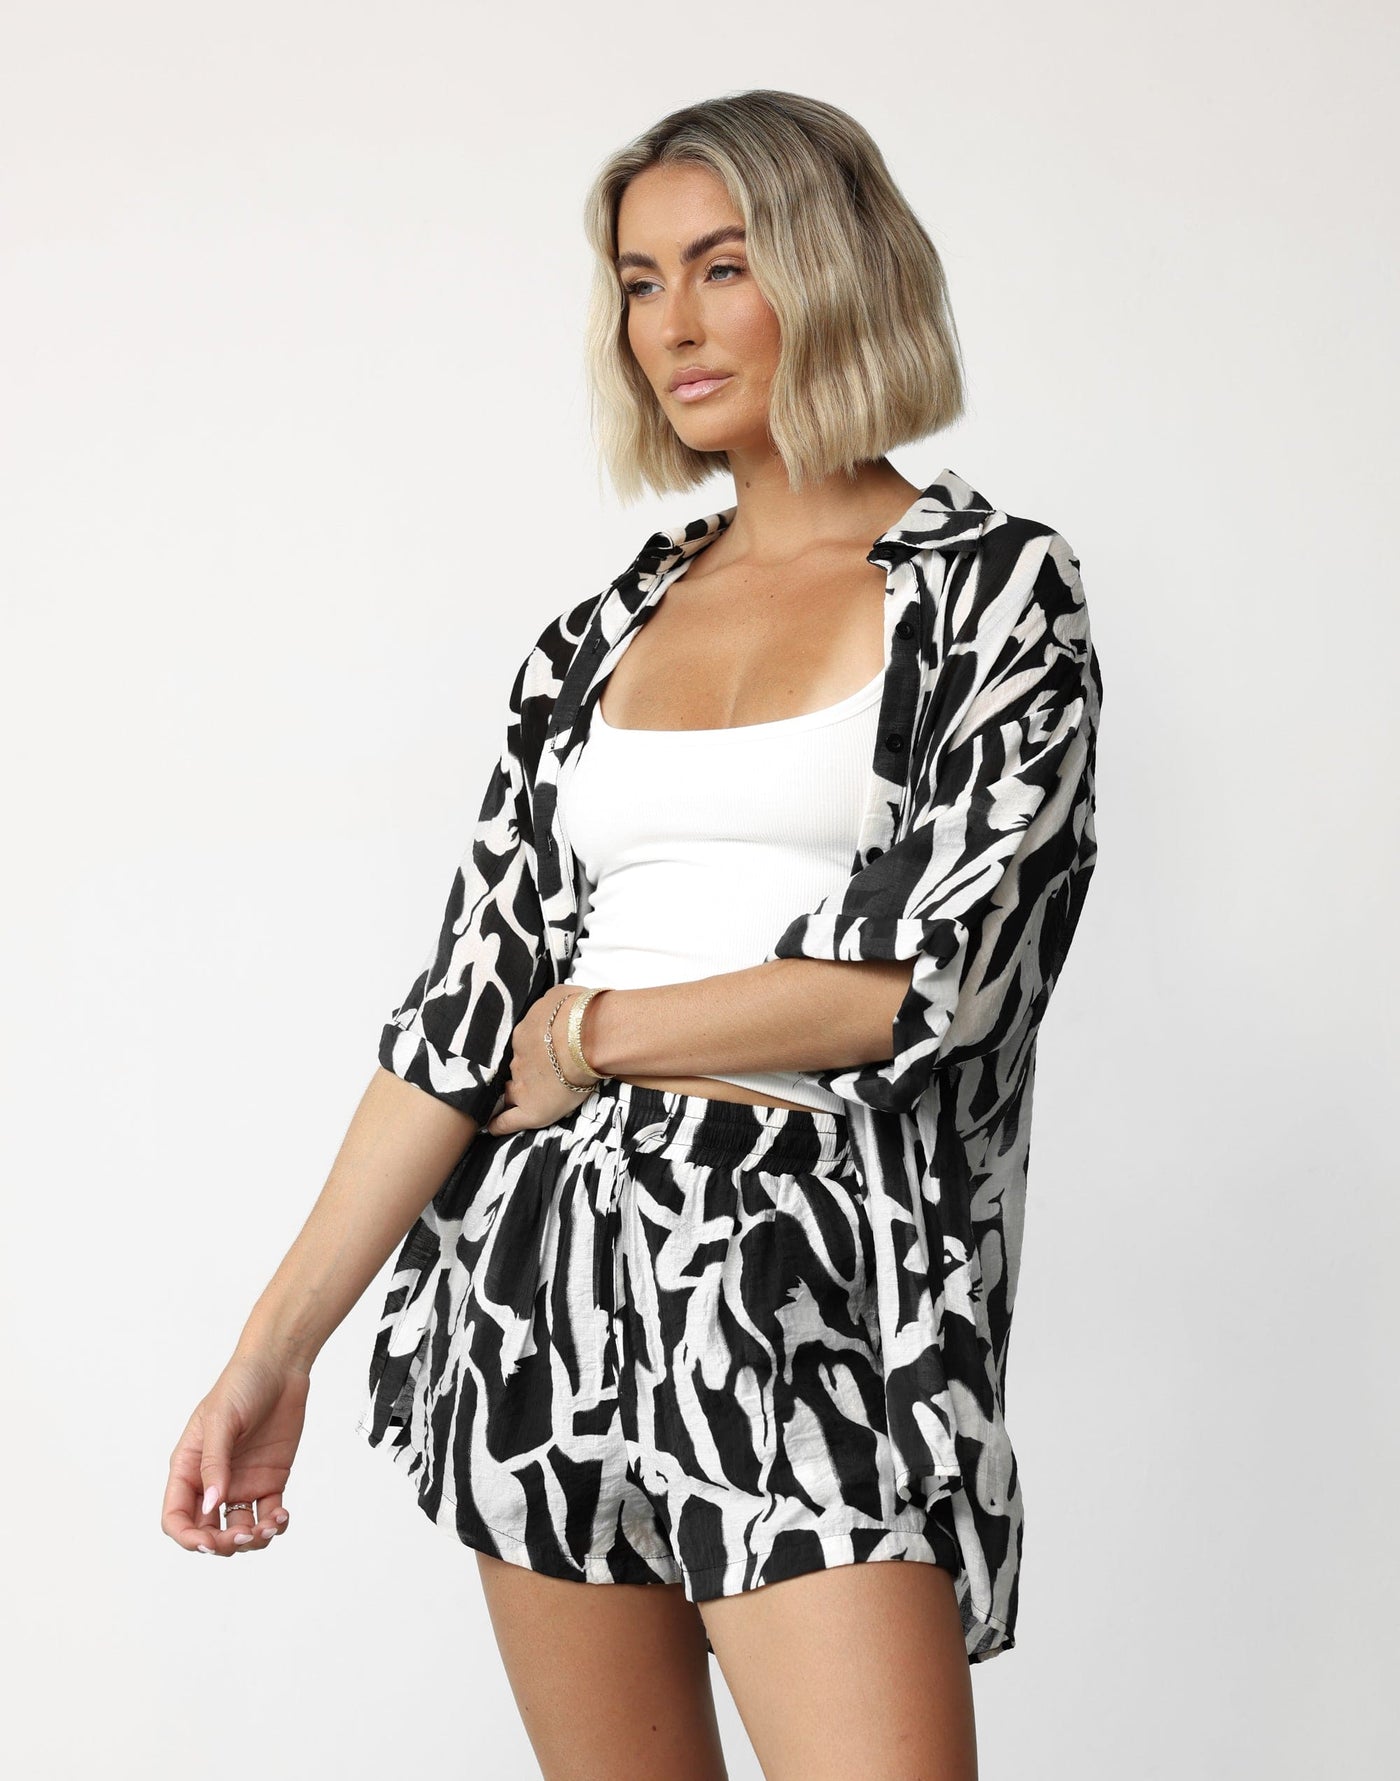 Avila Shirt (Monochrome Swirl) - Flowy Relaxed Fit Oversized Shirt - Women's Top - Charcoal Clothing